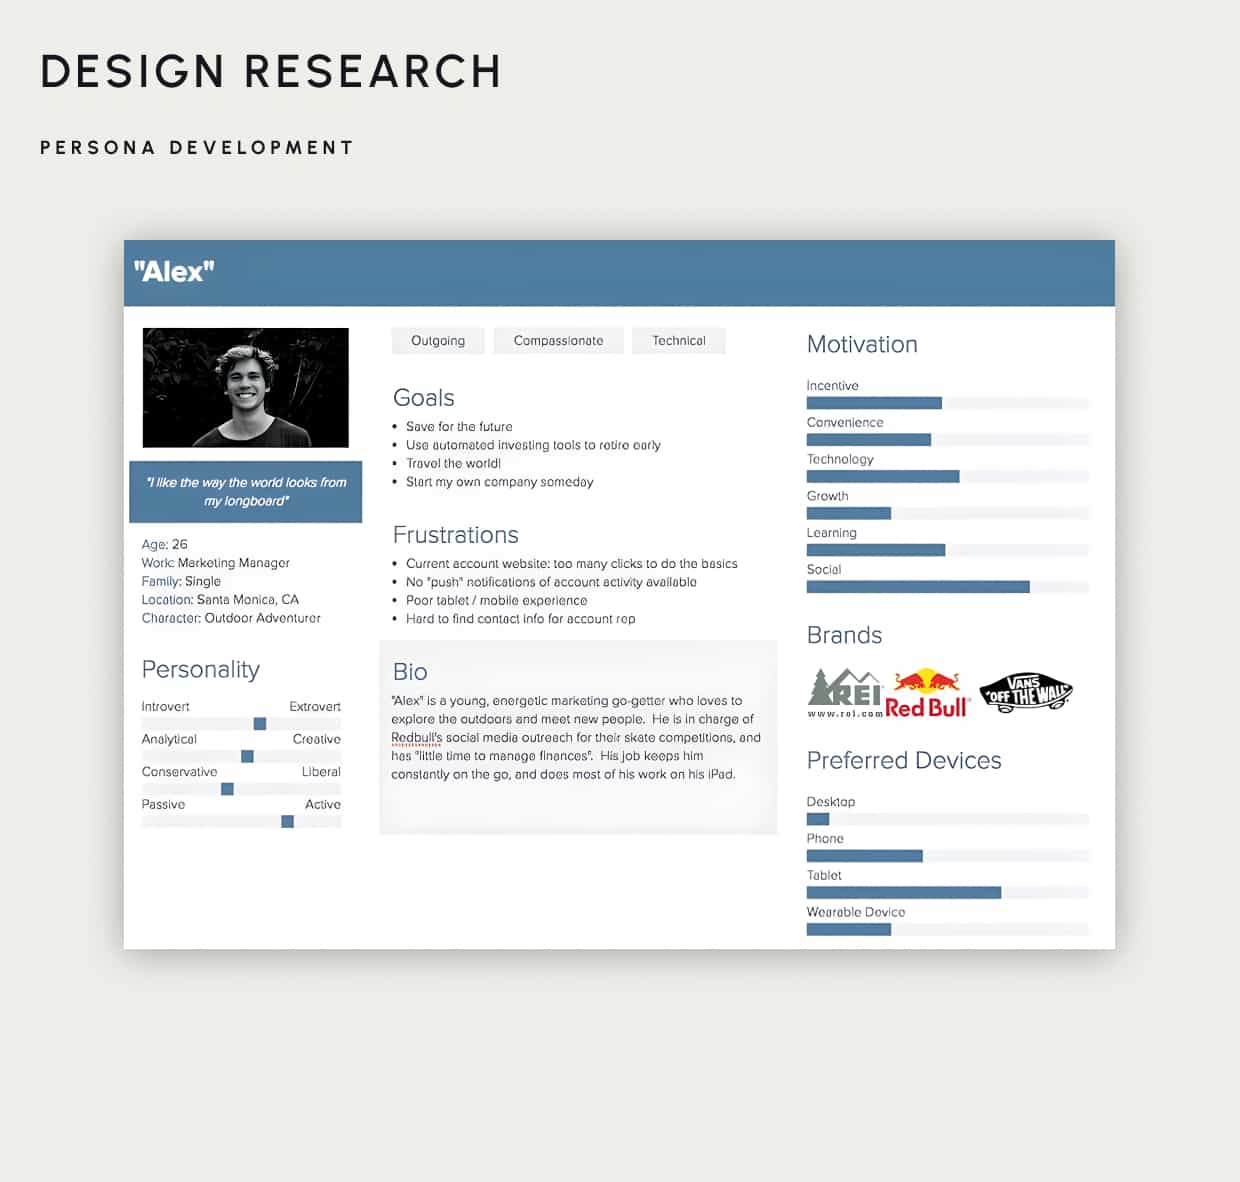 Red Bull 401(k) Web App - Design Research